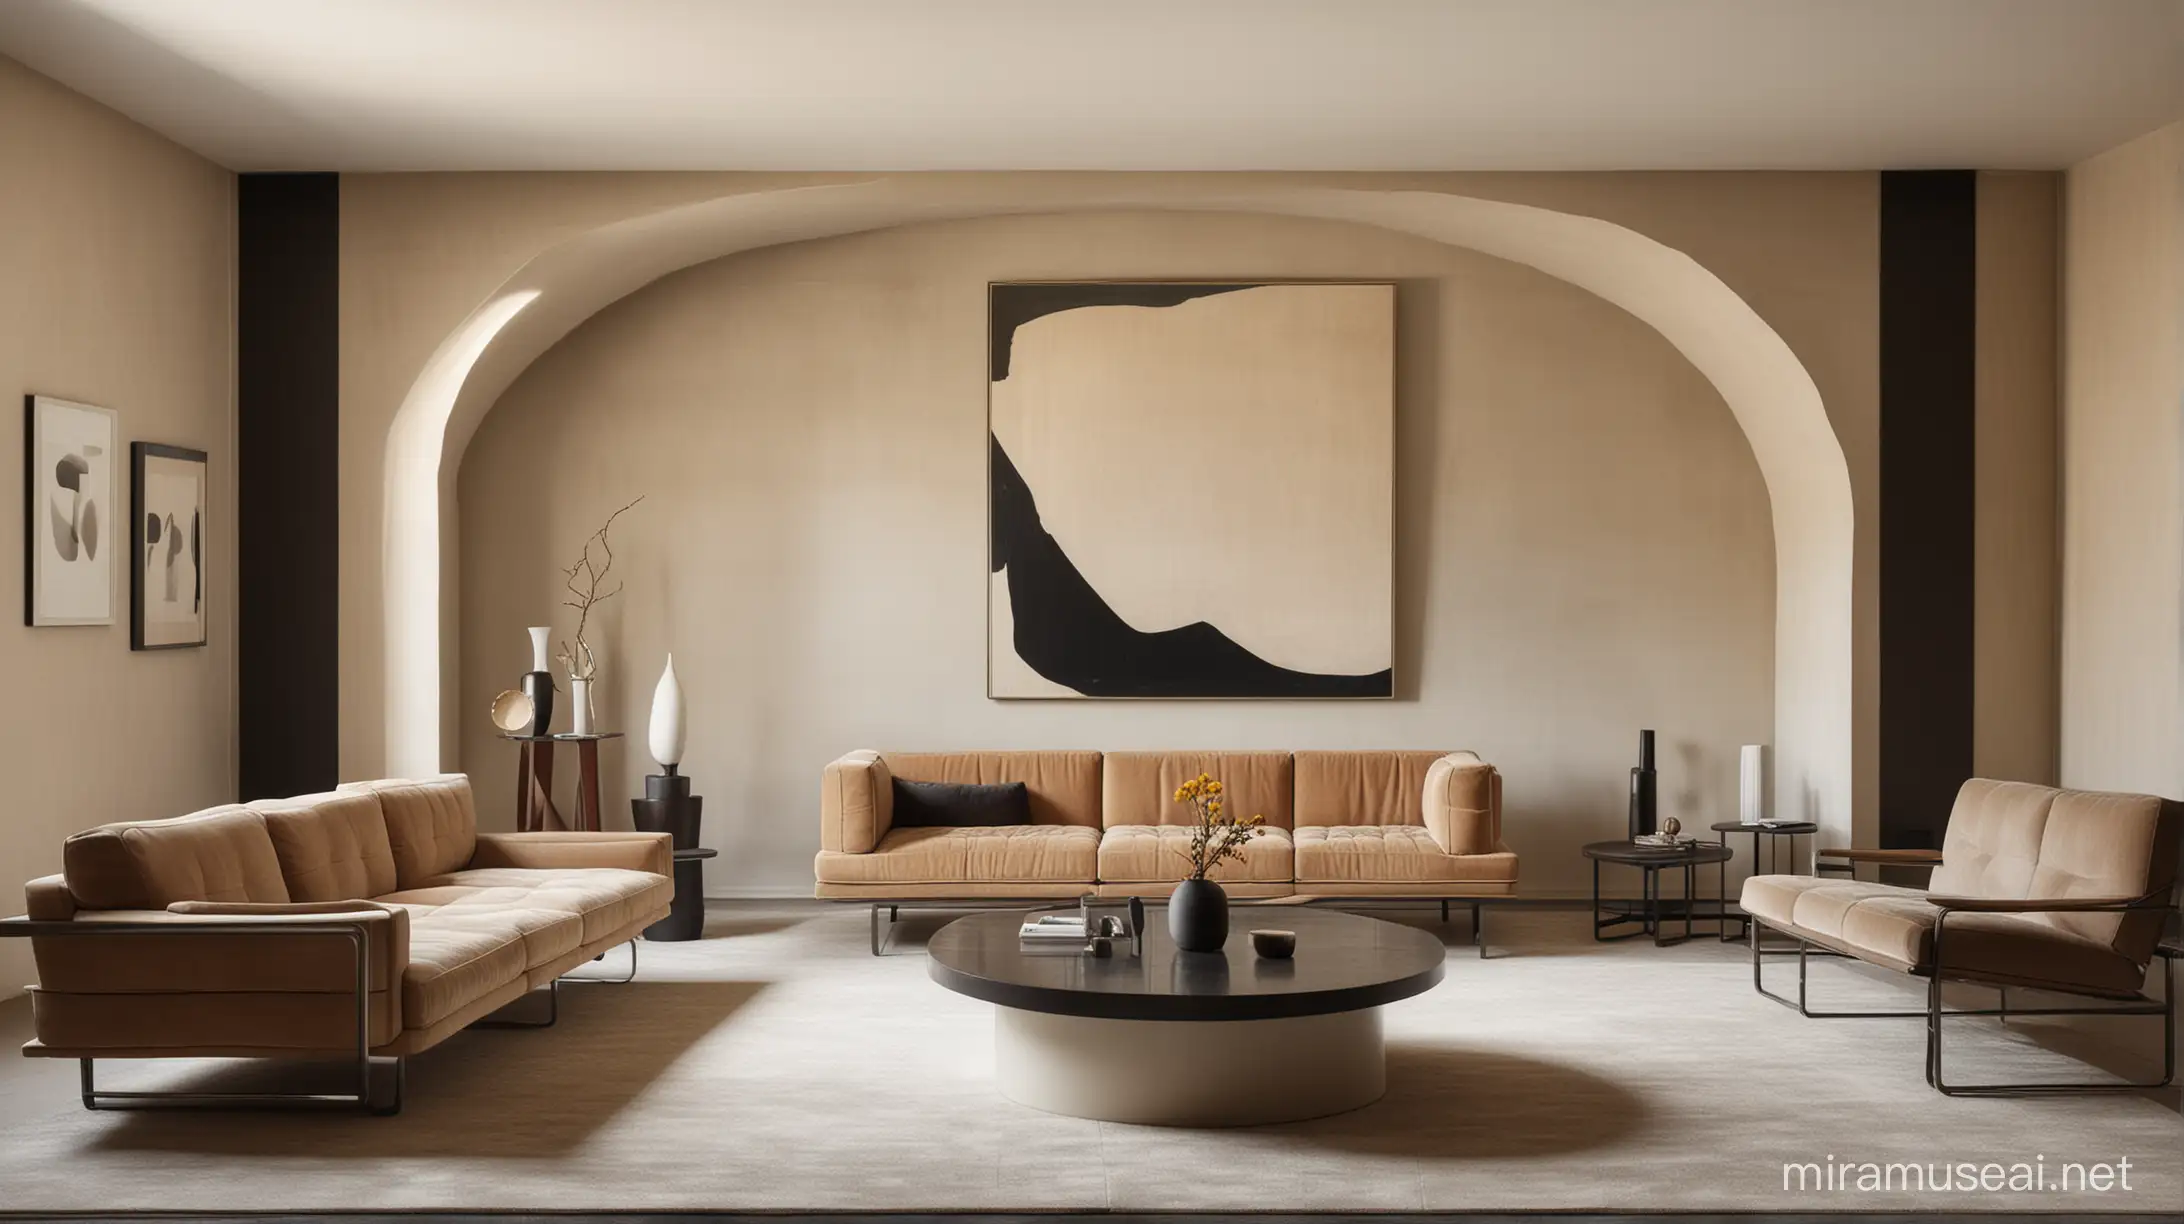 Geometric Artwork Modern Cinema Room Interior with Iconic Designer Furniture